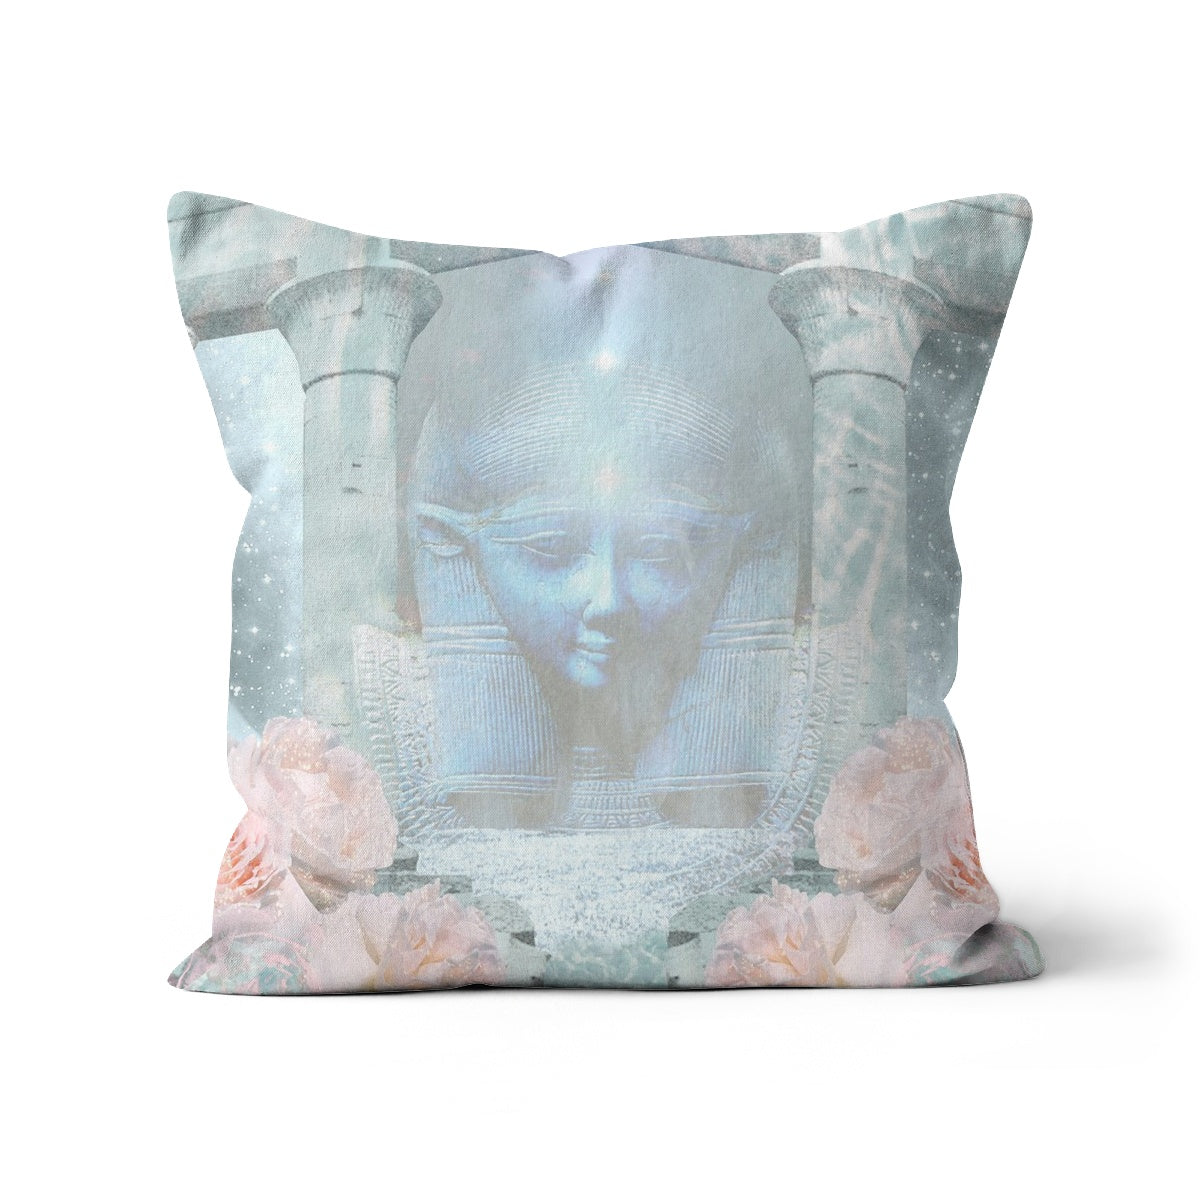 Hathor Temple Cushion - Starseed Designs Inc.